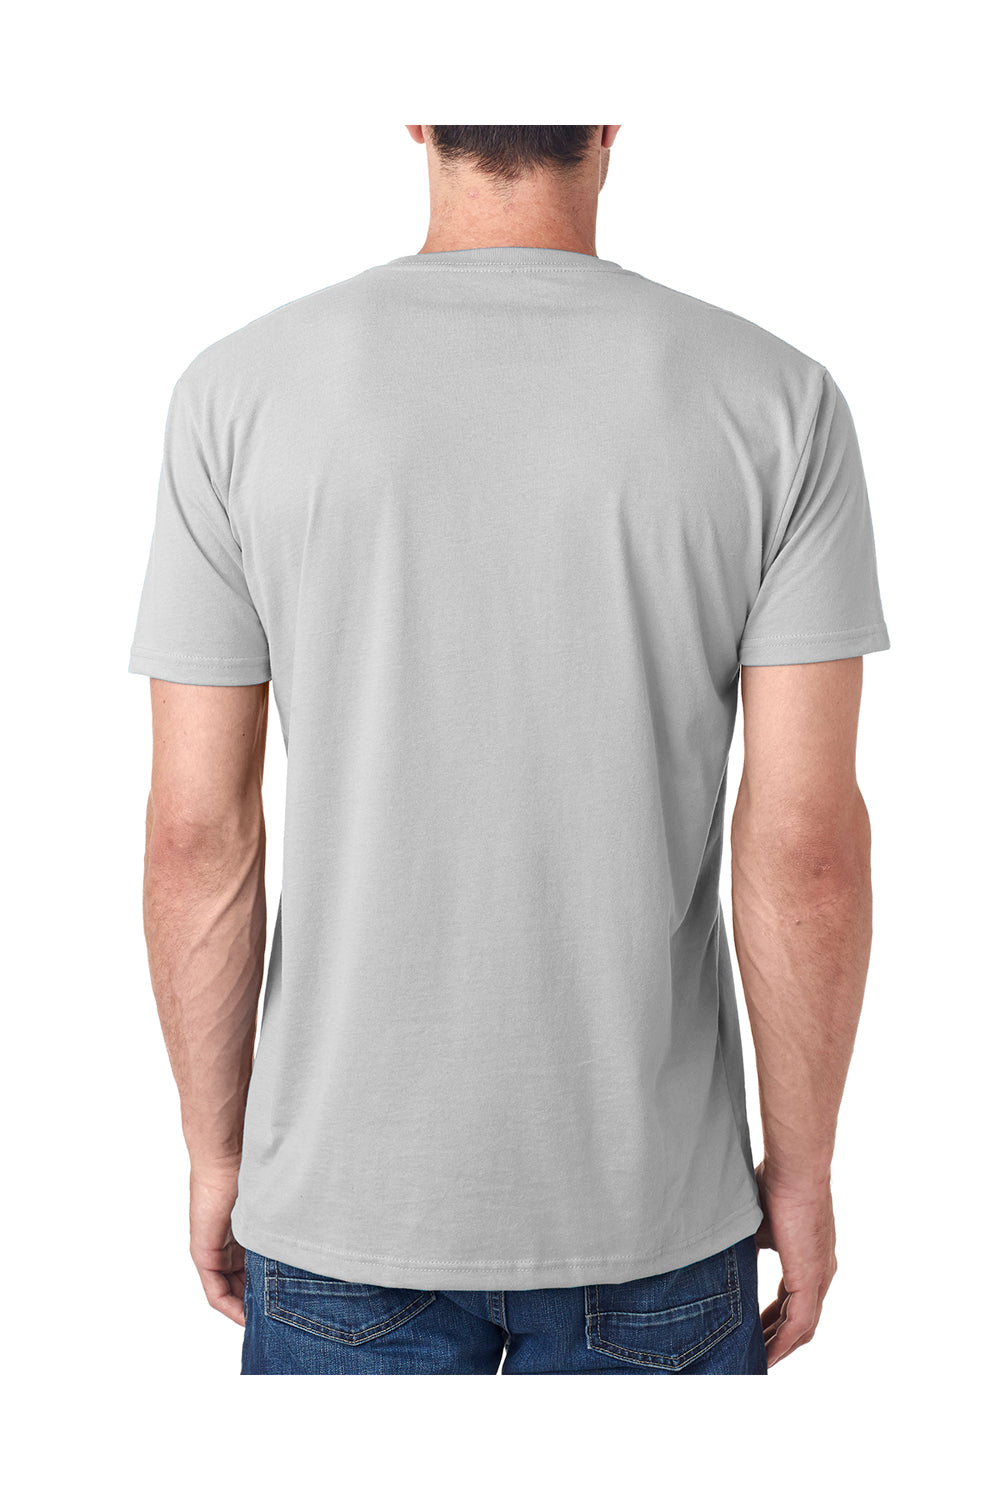 Next Level 6440 Mens Sueded Jersey Short Sleeve V-Neck T-Shirt Light Grey Back